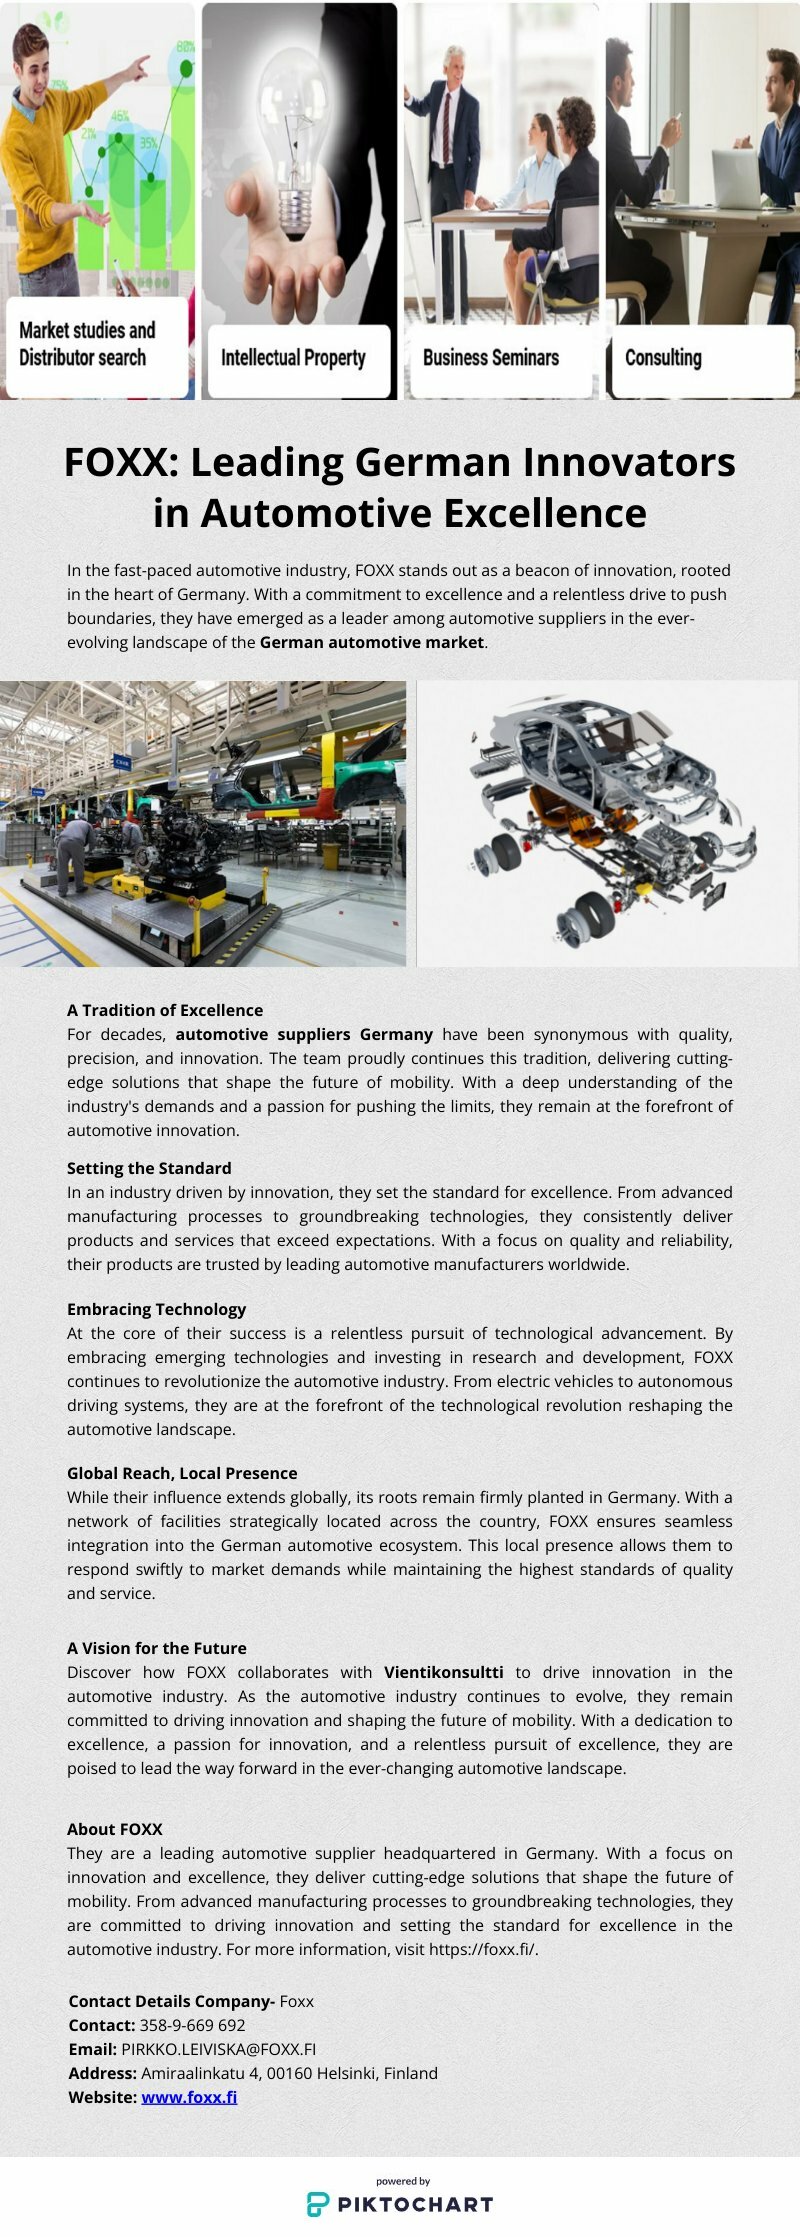 FOXX: Leading German Innovators in Automotive Excellence | Piktochart Visual Editor